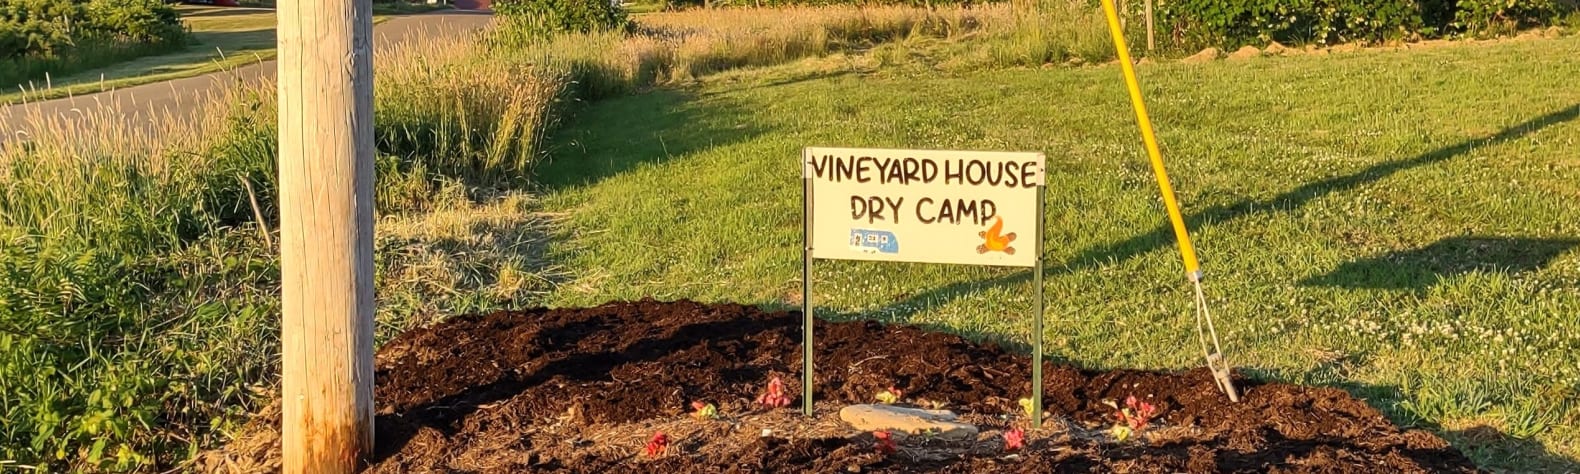 The Vineyard House Dry Camp